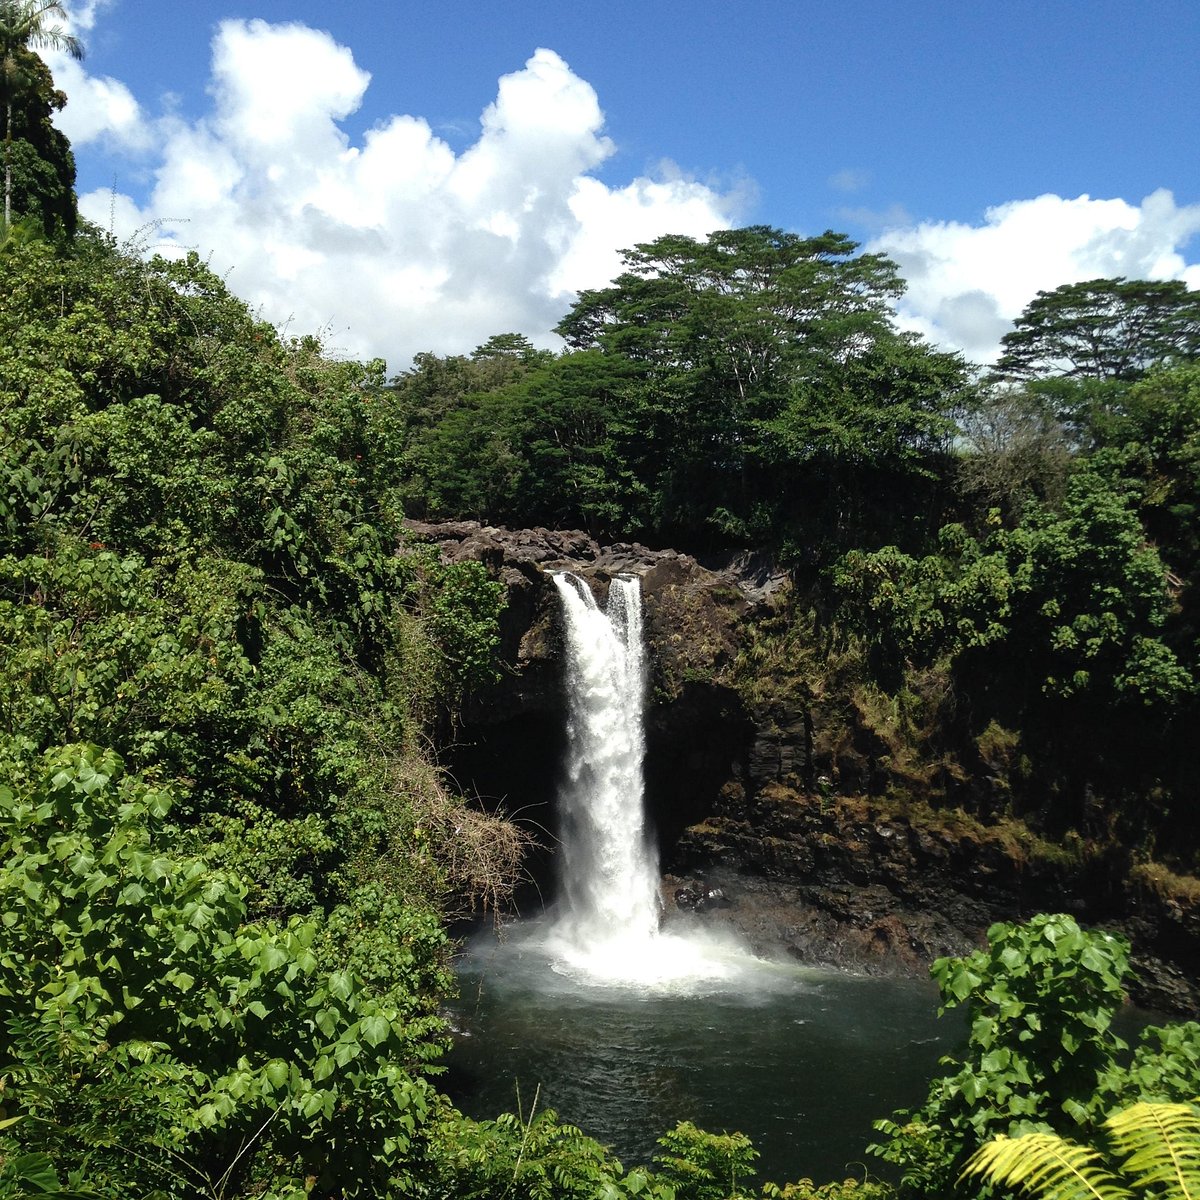 Hilo Culture, Legends, & More Day Tour (Hawaii)